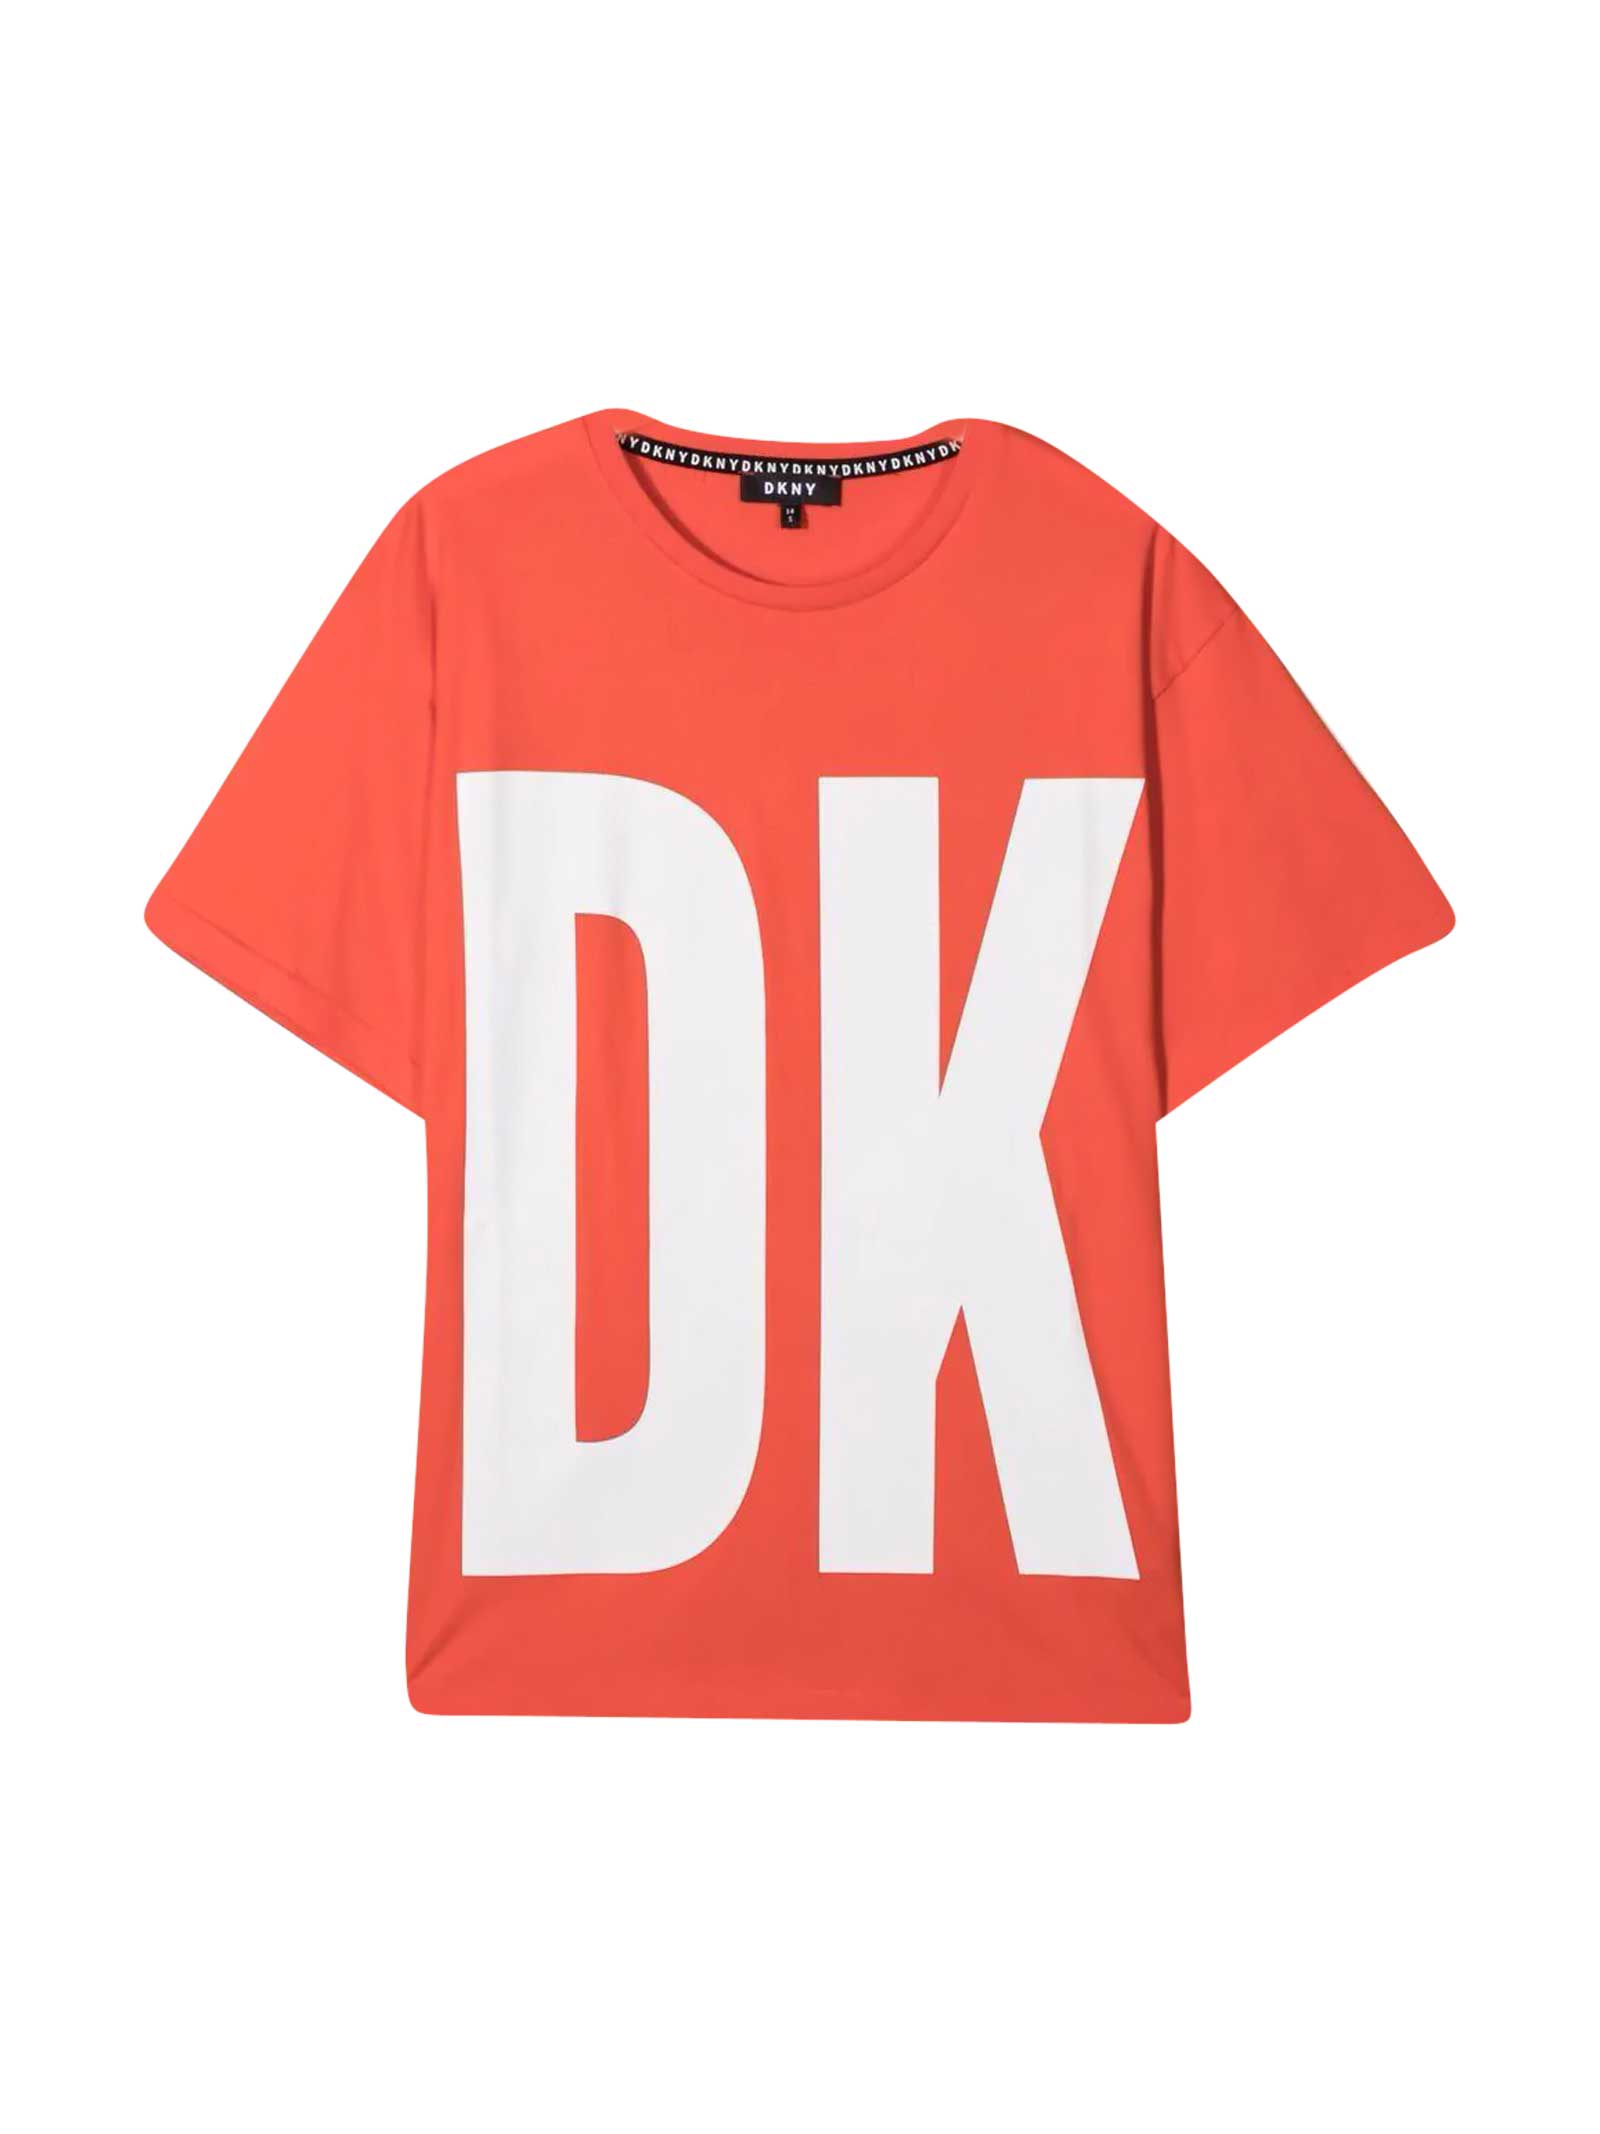 DKNY TEEN T-SHIRT WITH PRESS,11838954